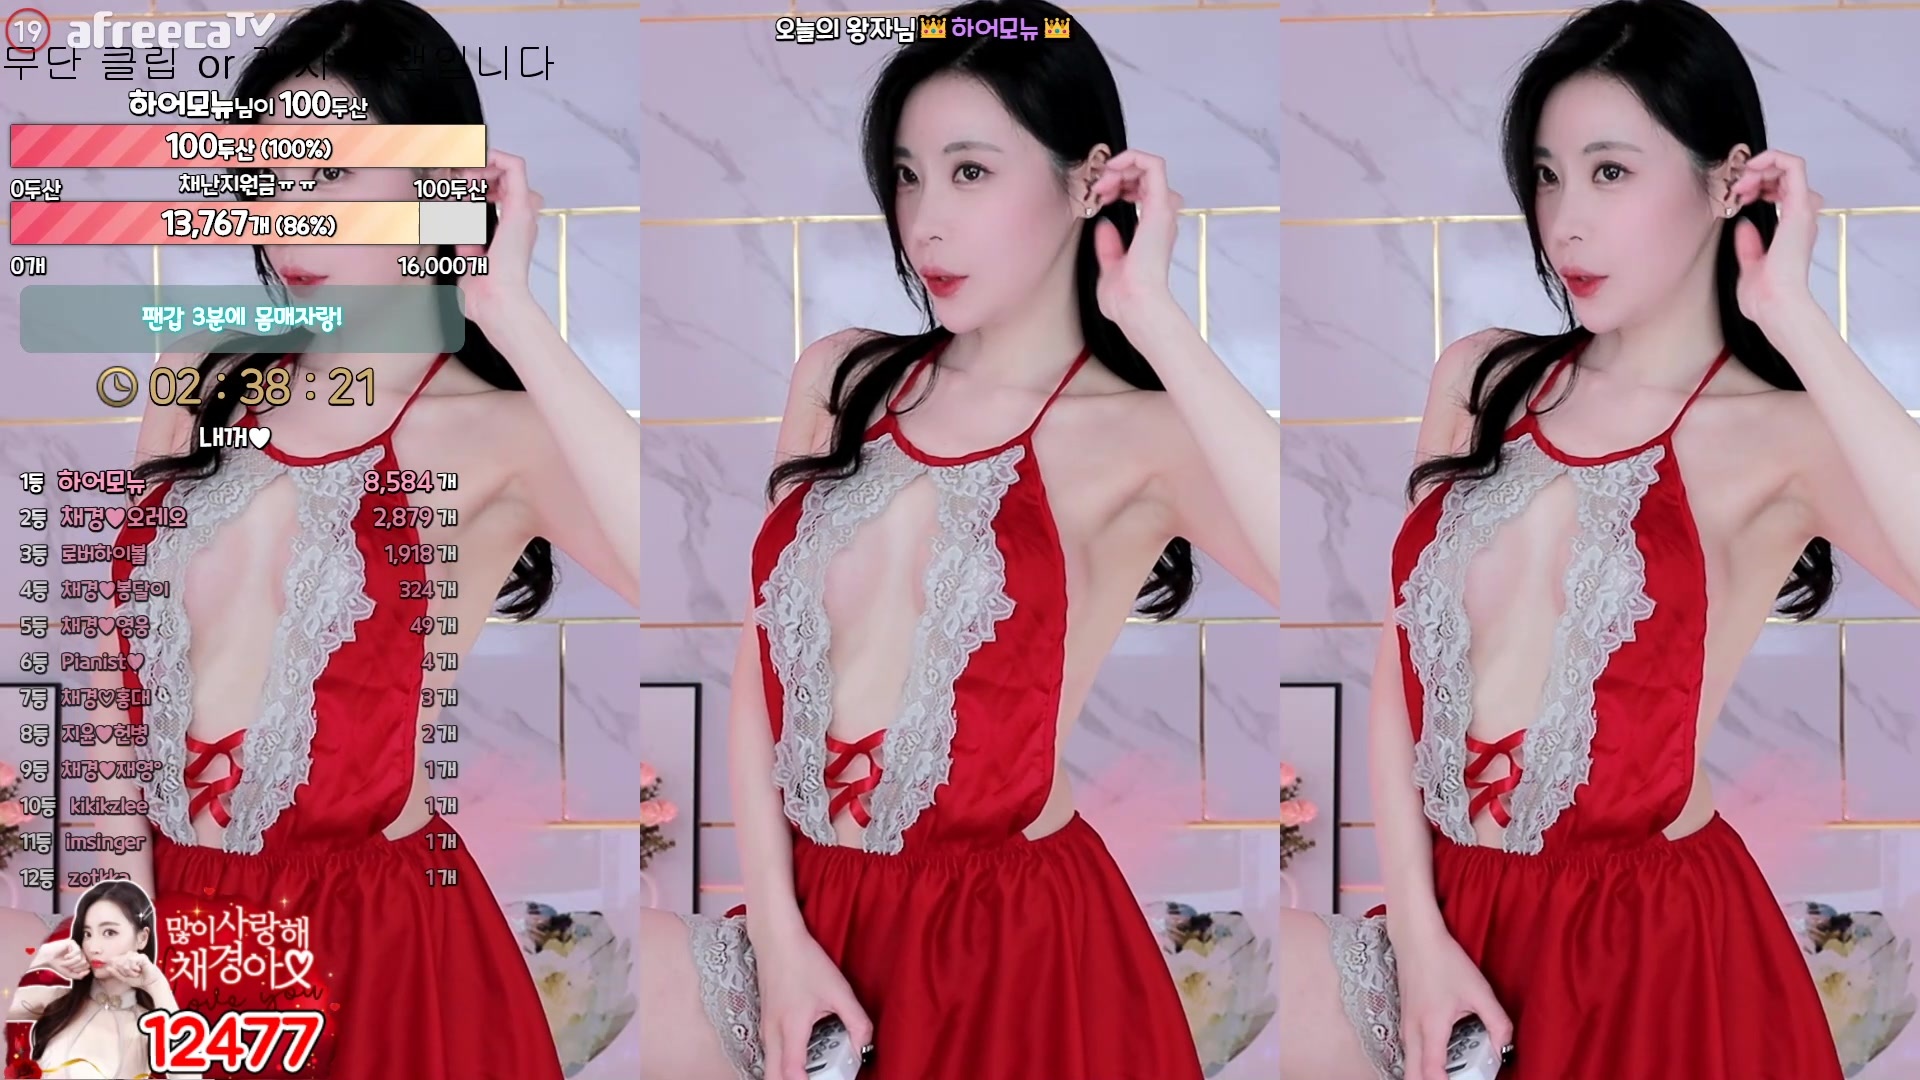 AfreecaTV Dance Girl @Cai Jing - 魅惑のホットダンスミニコレクション (11)